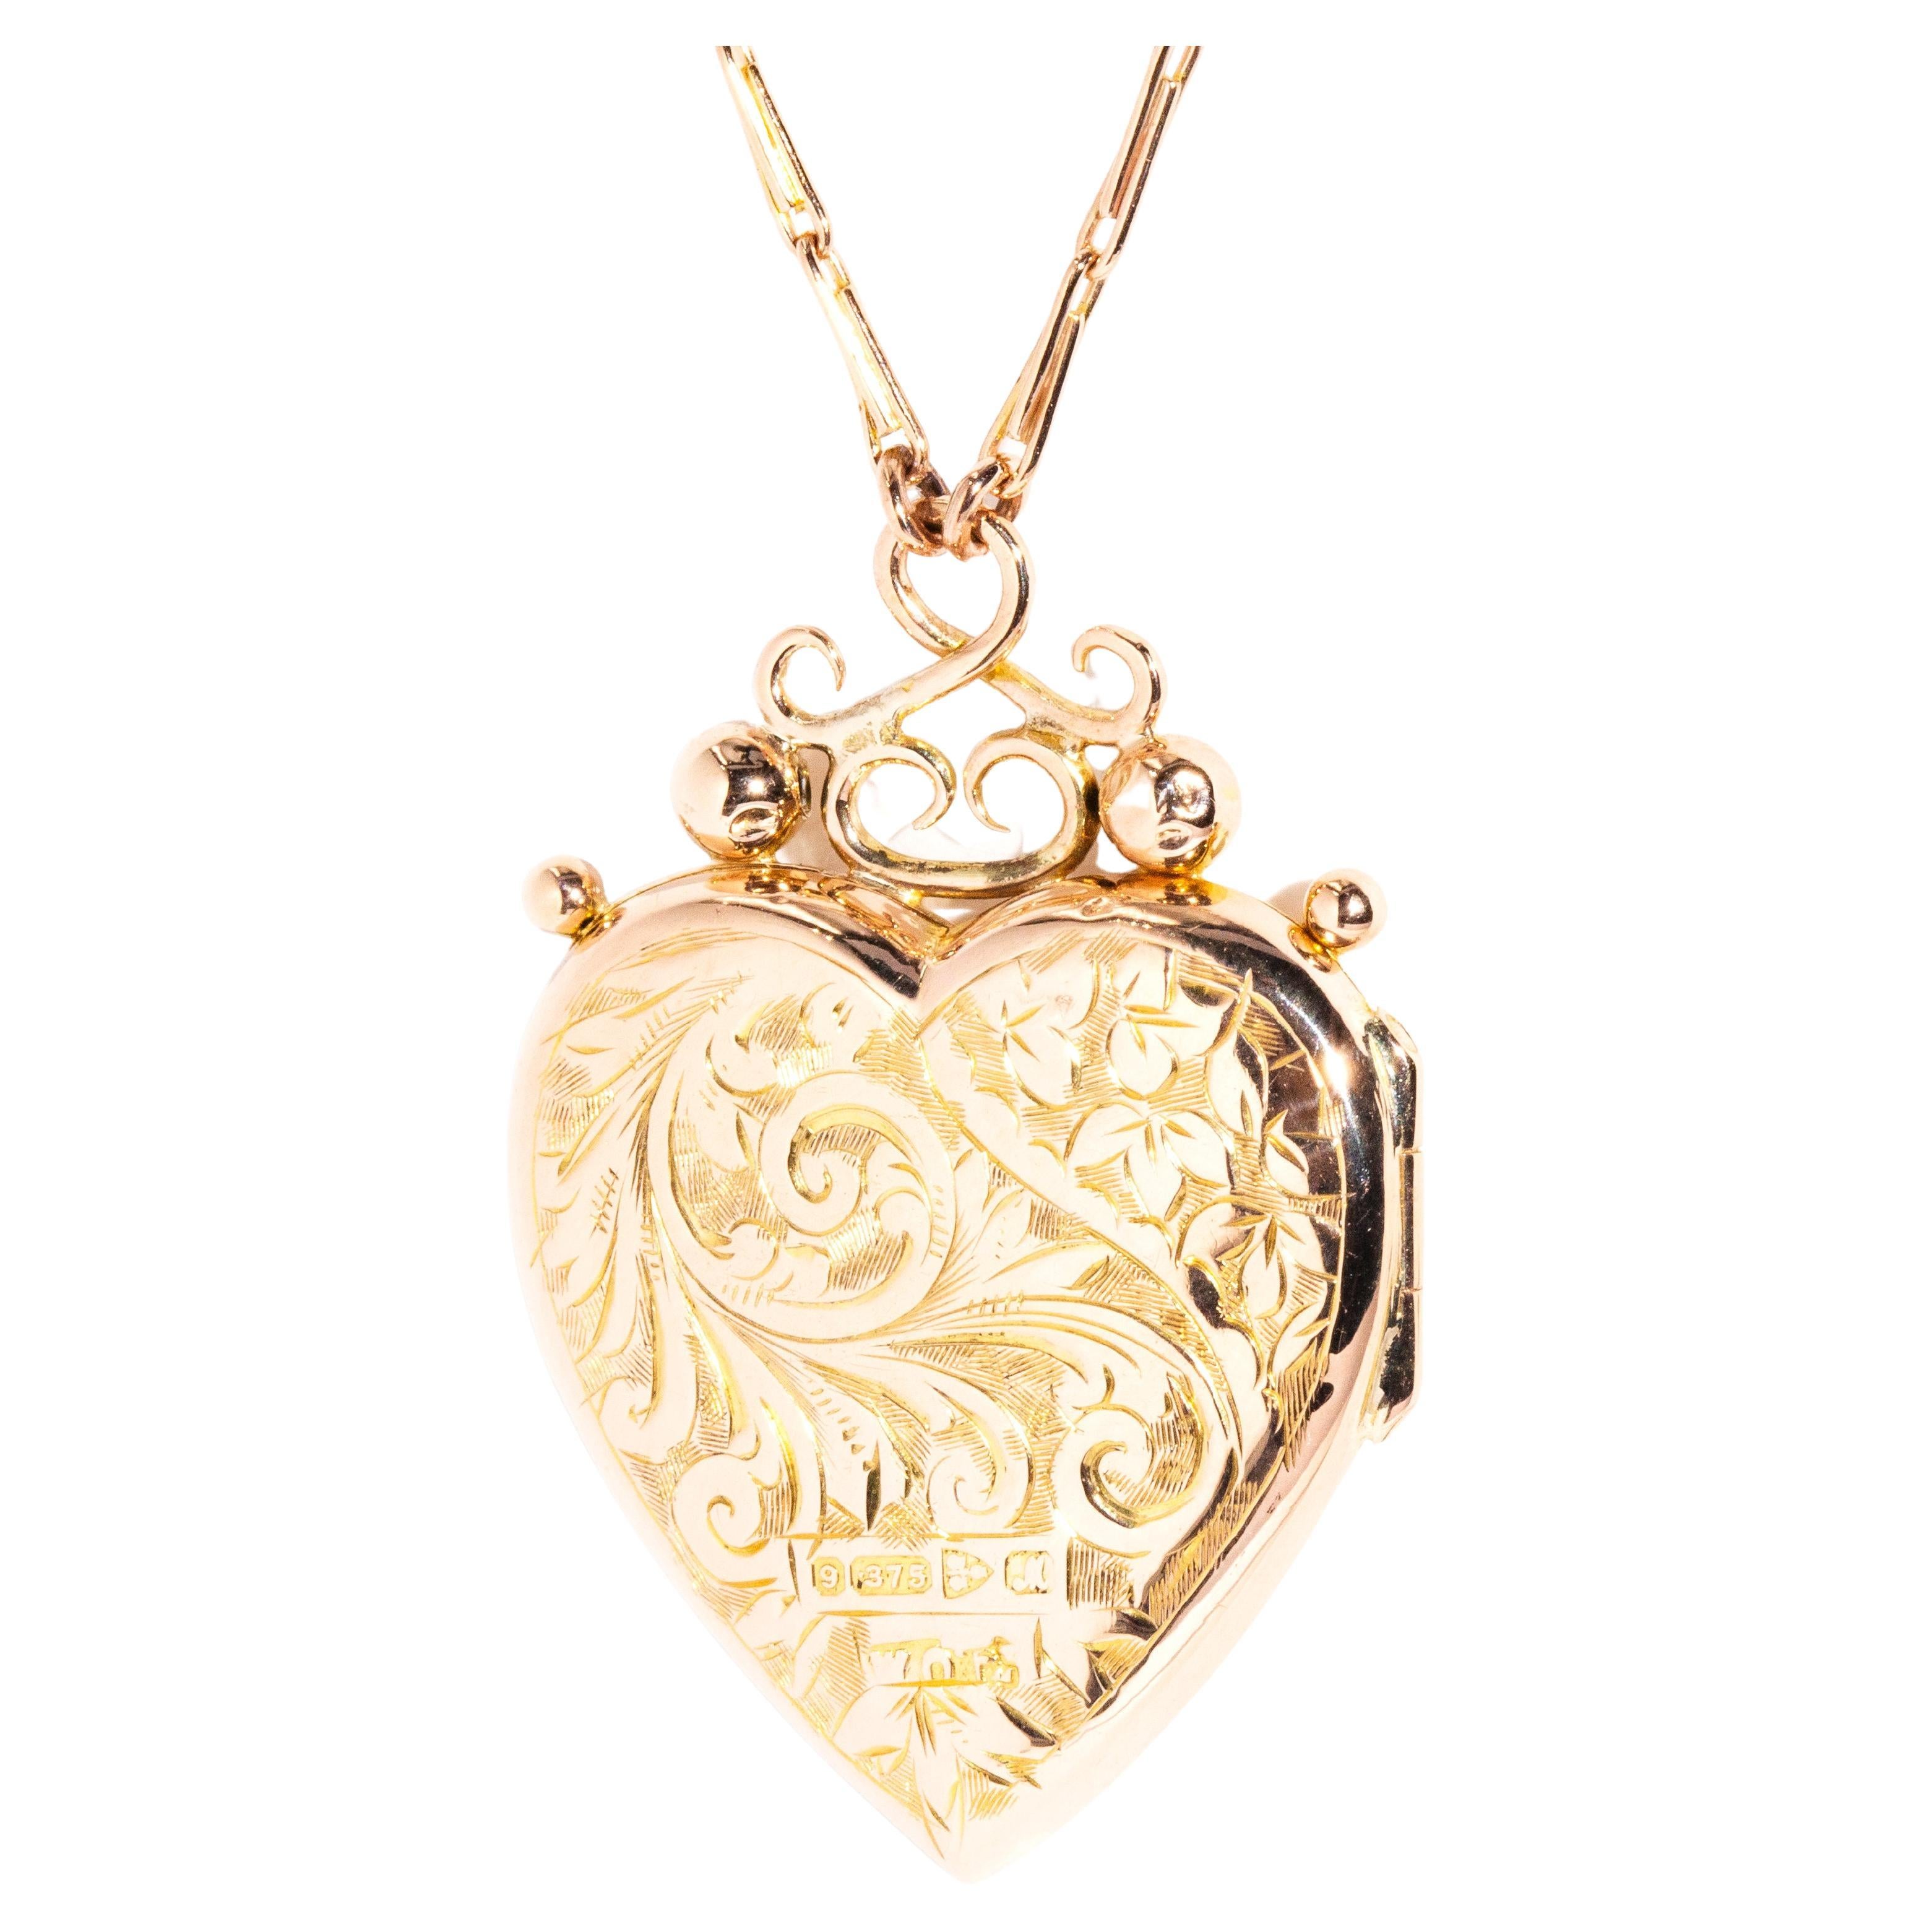 Antique Edwardian Era Patterned & Hallmarked Heart Locket & Chain 9 Carat Gold